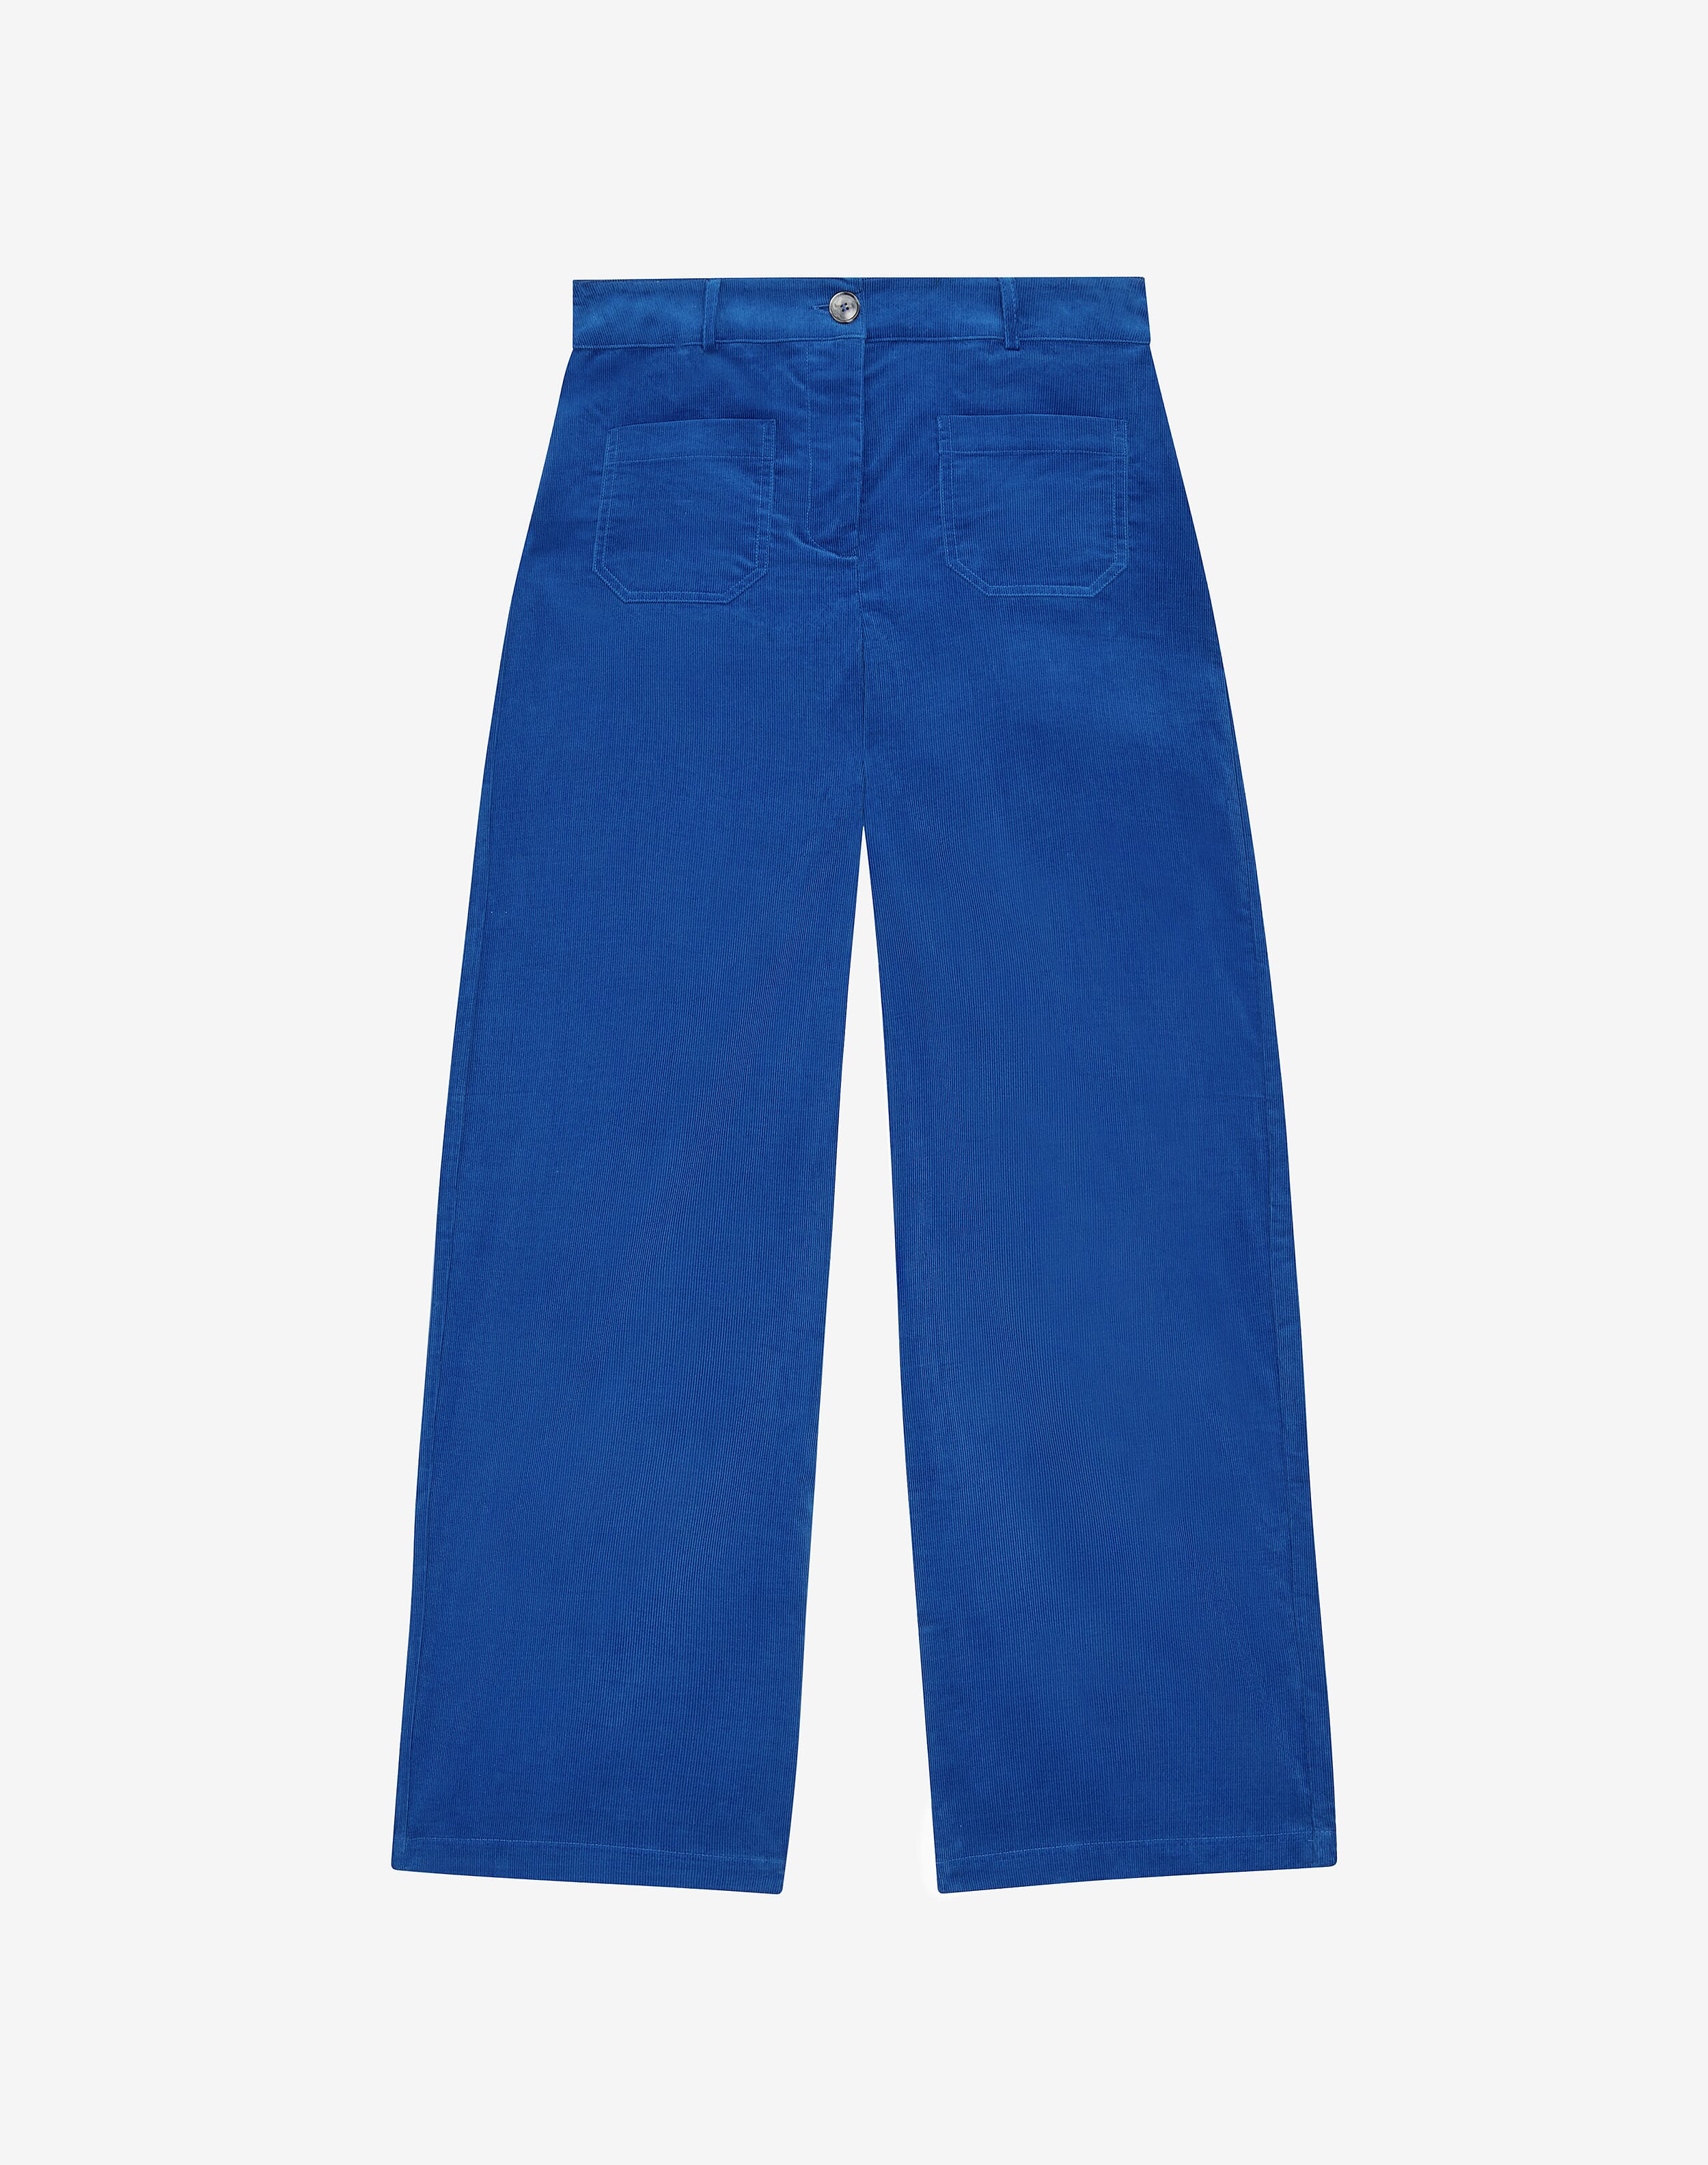 Blue Needlecord Trousers | Women's Trousers | Brora Fashion